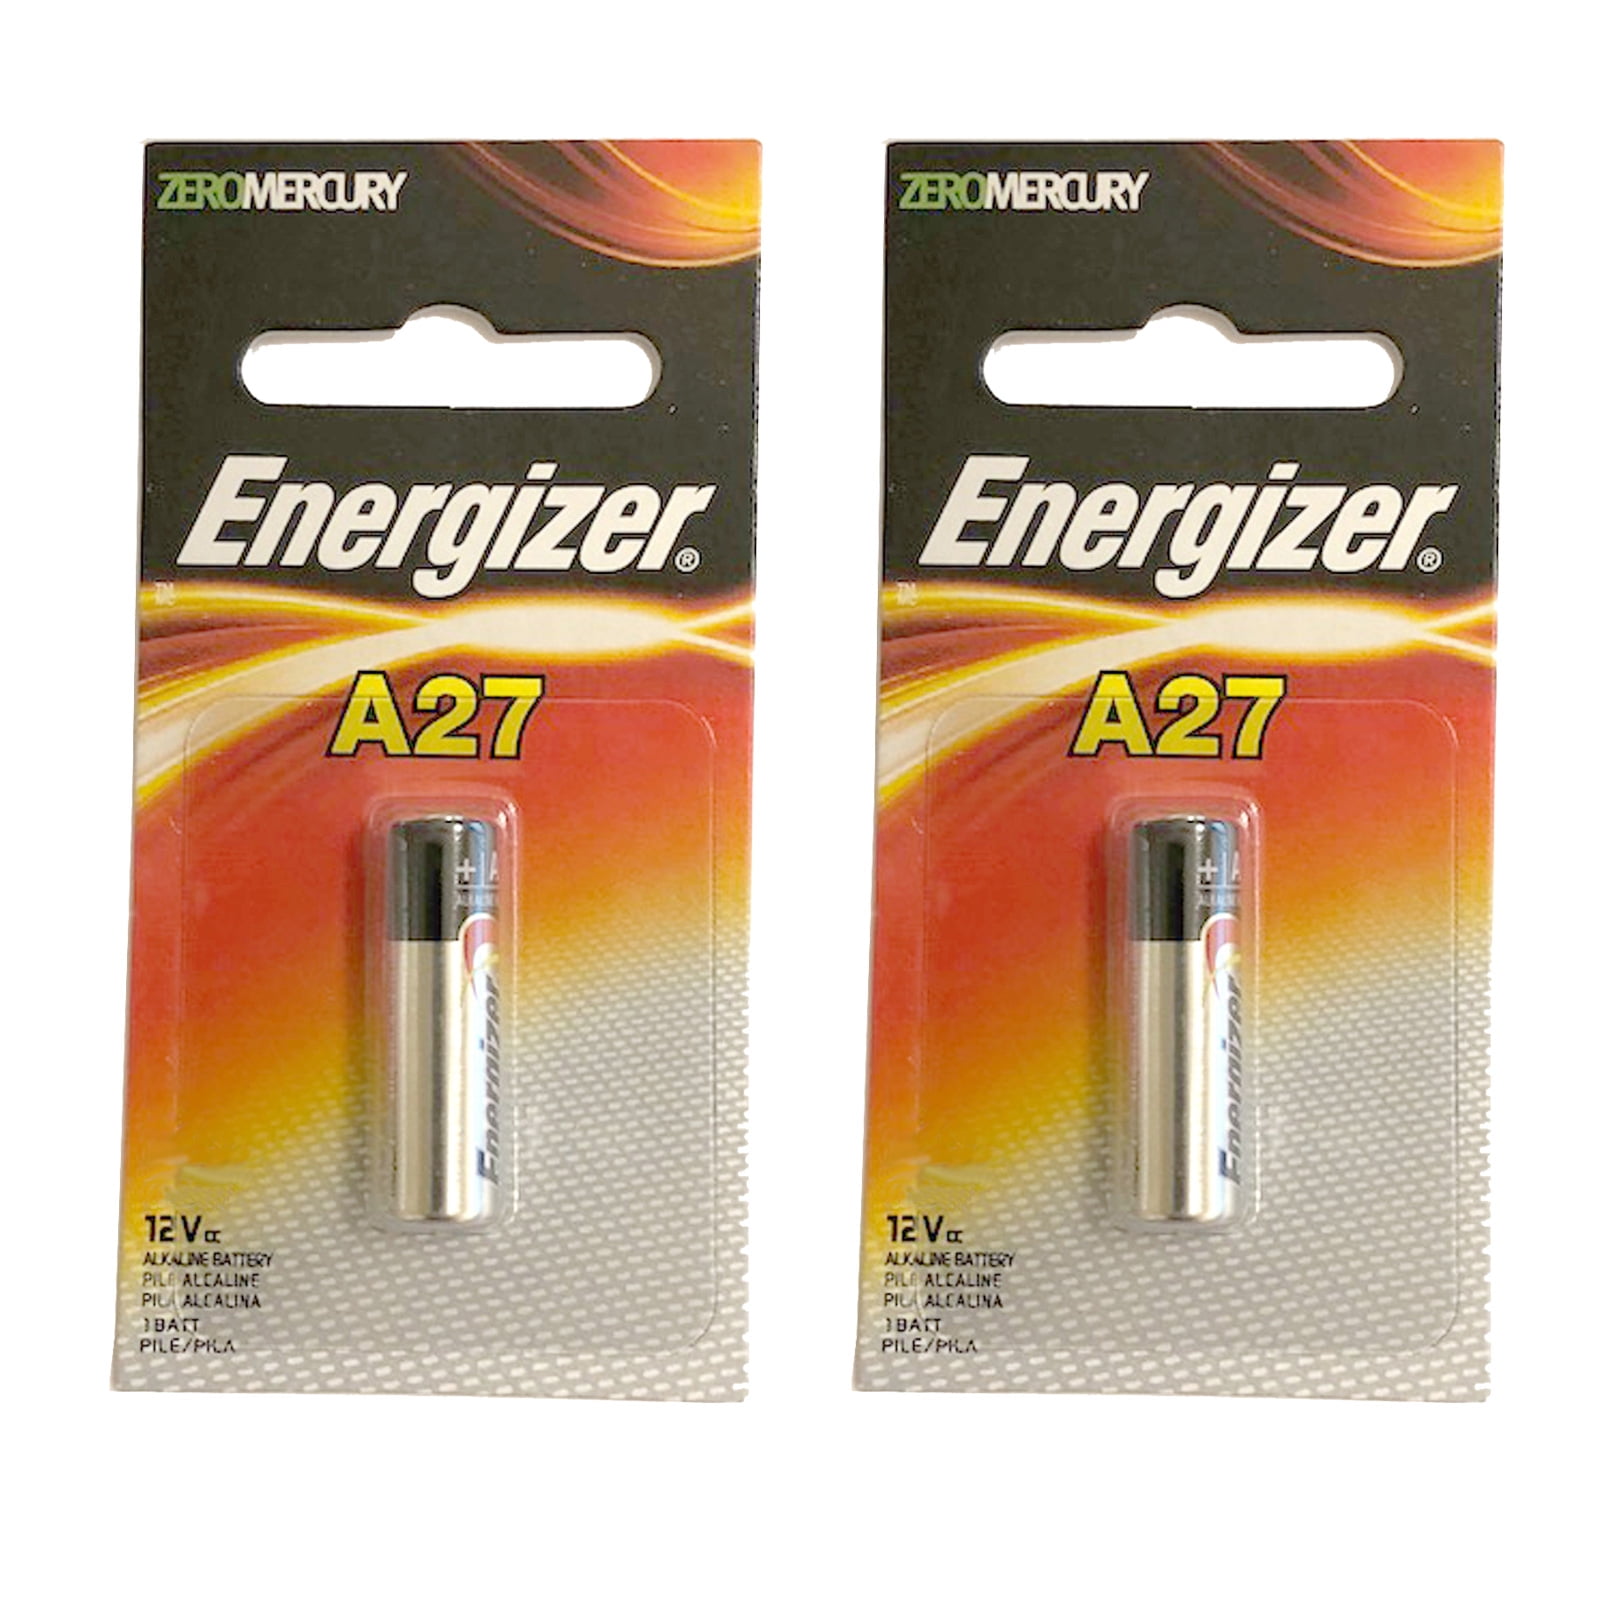 1EA Energizer Battery 12V Alkaline A27 Zero Mercury Exp. 03/2023 A27BPZ